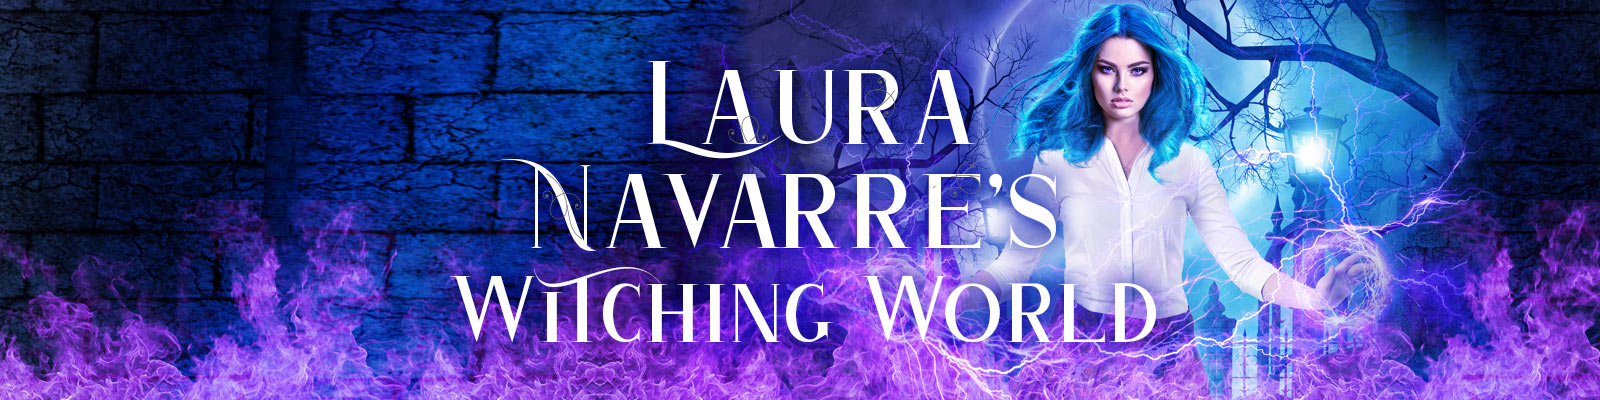 Laura Navarre's Witching World